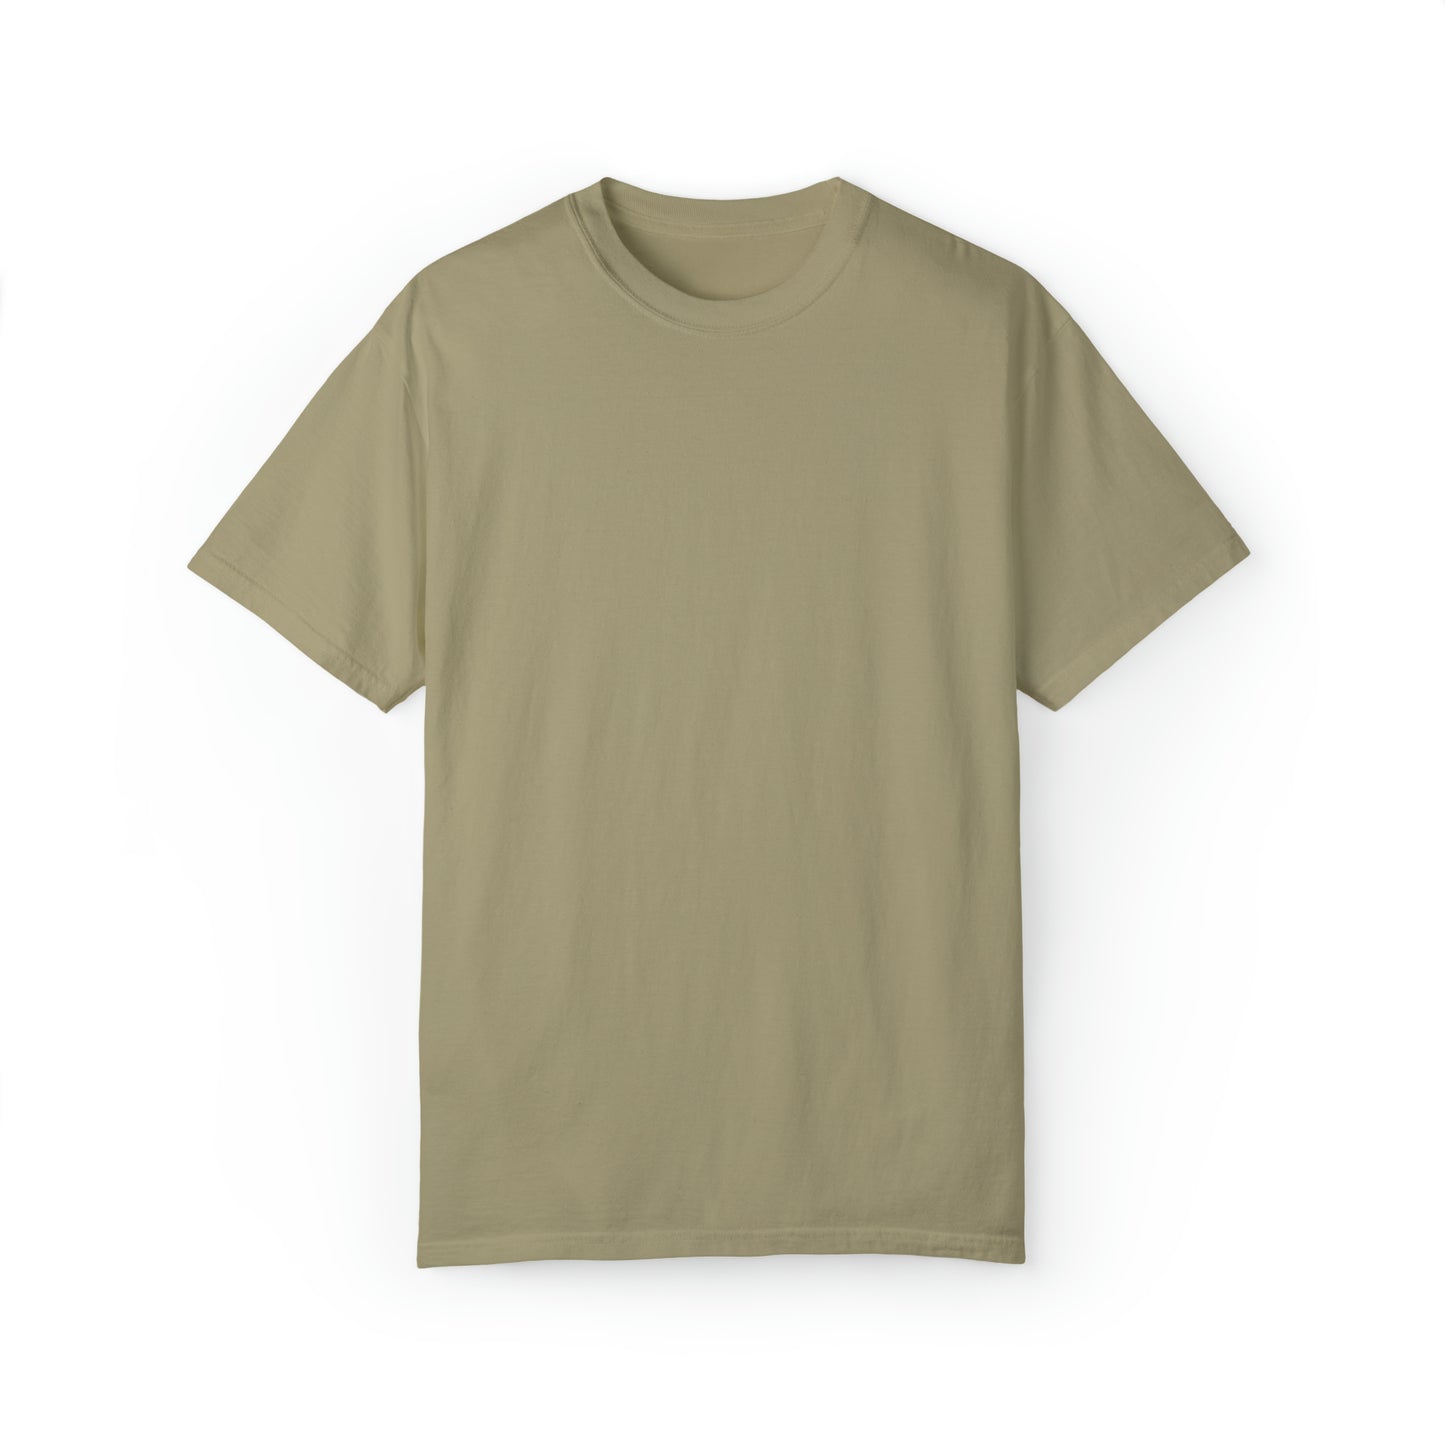 Unisex Comfort Colors T-shirt | The Blind Pig Glasses